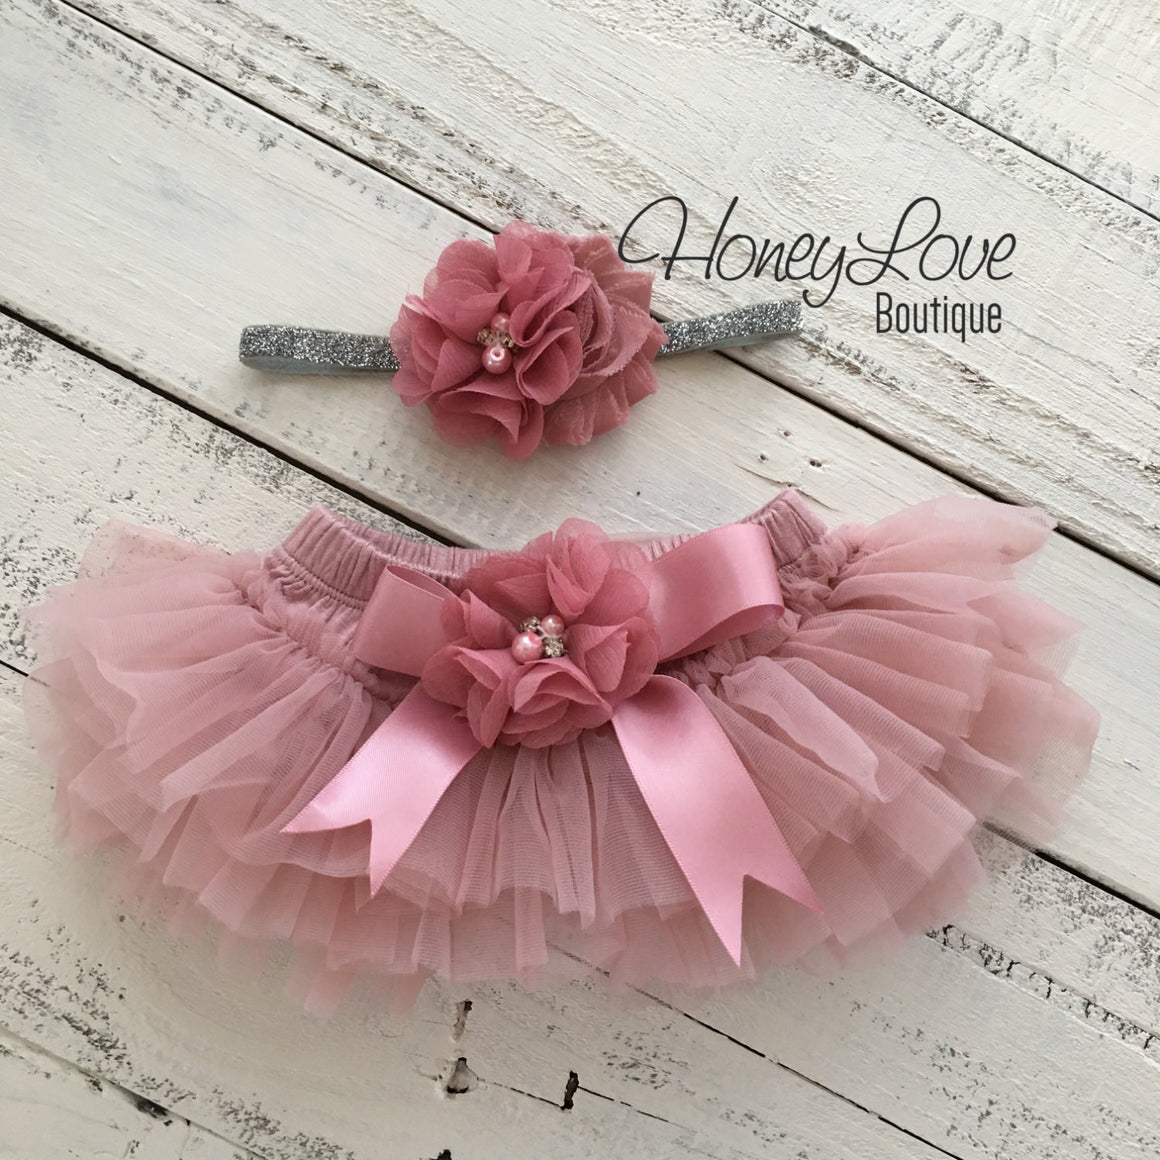 Vintage Pink tutu skirt bloomers and silver glitter headband - embellished bloomers - HoneyLoveBoutique